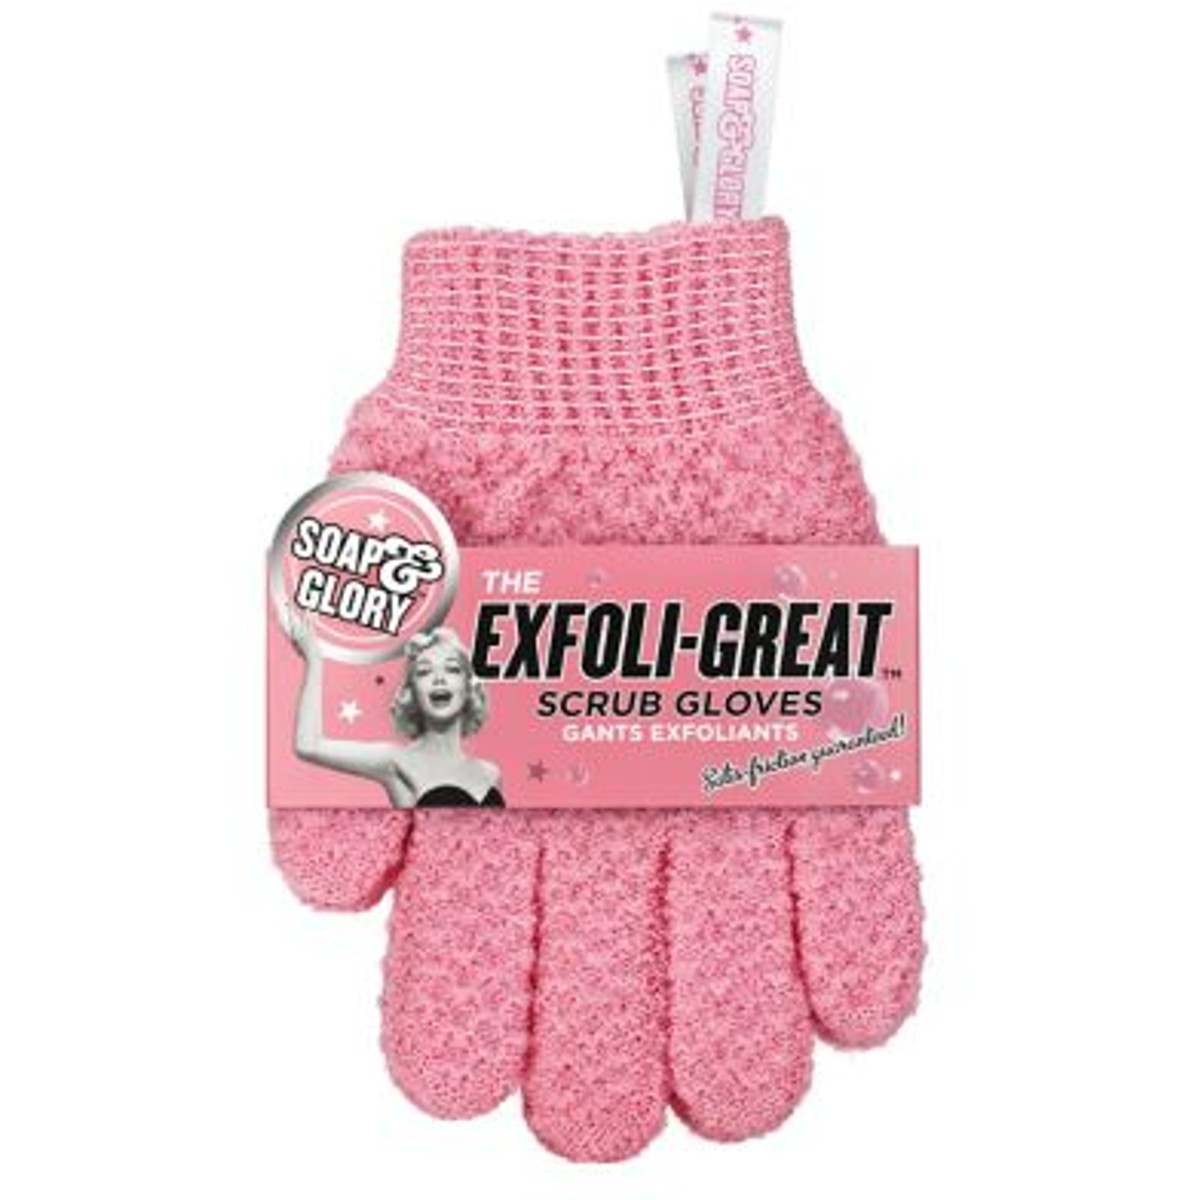 The Exfoli-Great Scrub Exfoliating Gloves